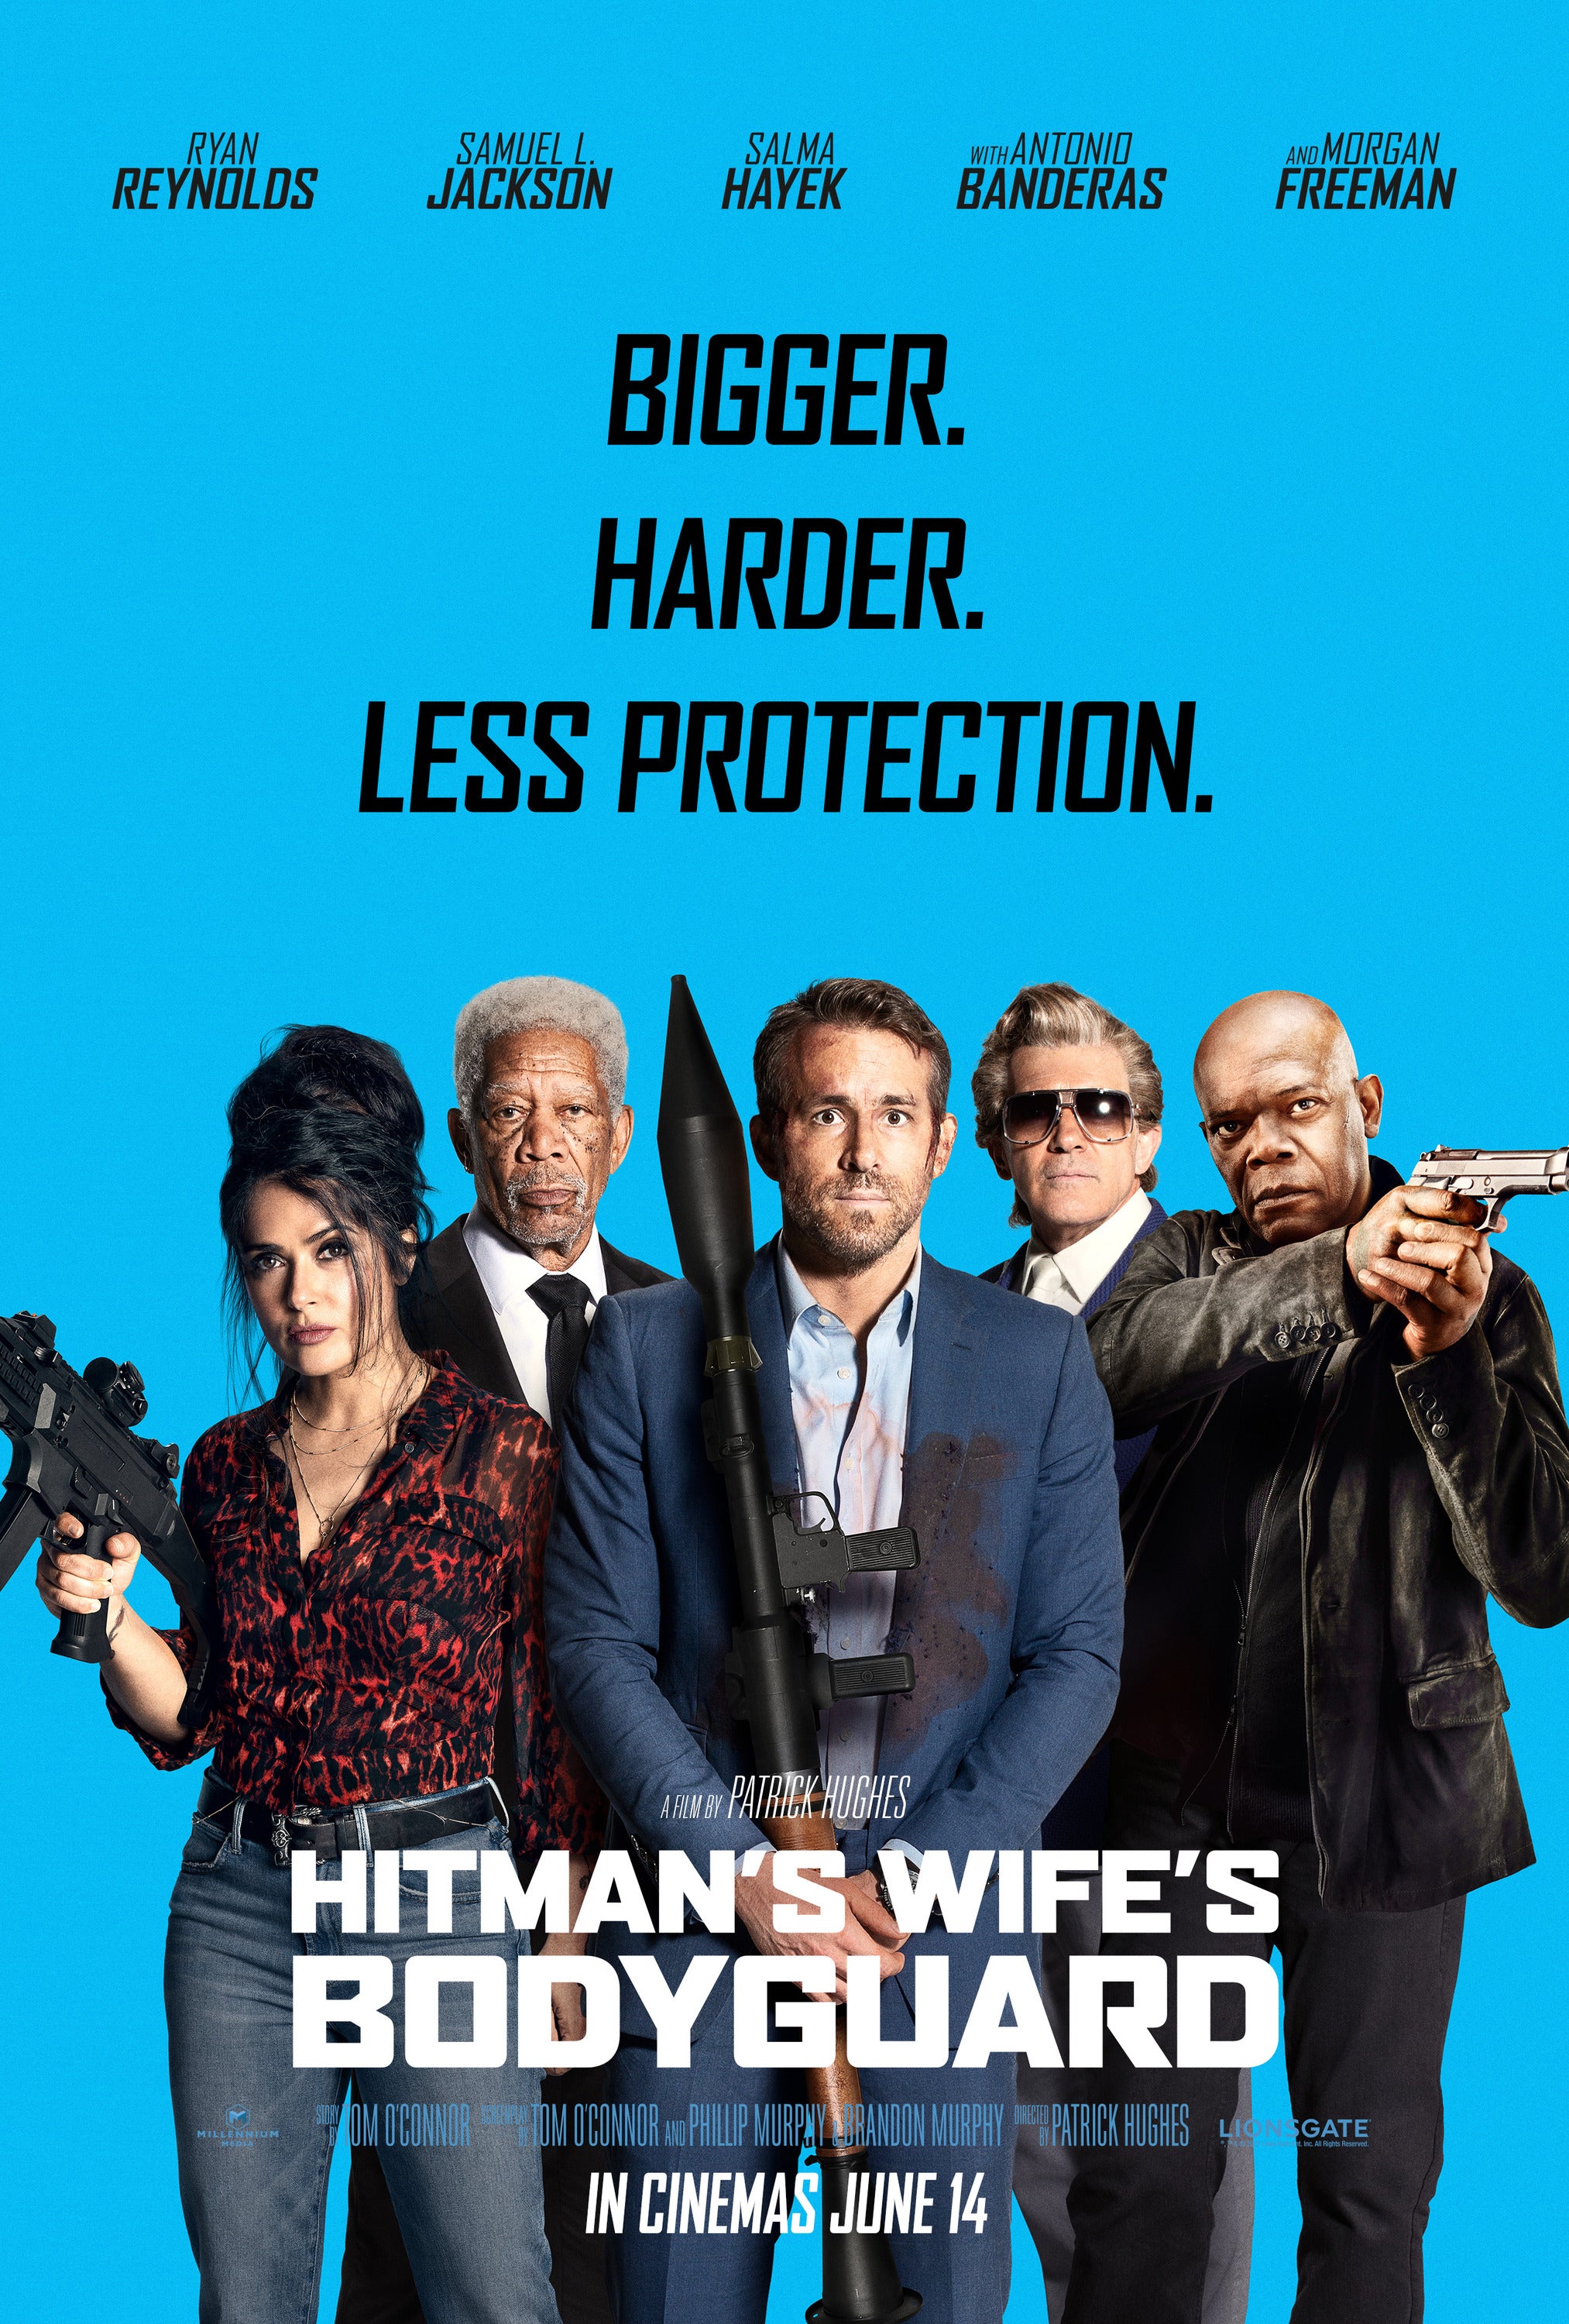 The Hitmans Wifes Bodyguard Movie Ryan Reynolds Fleece Blanket